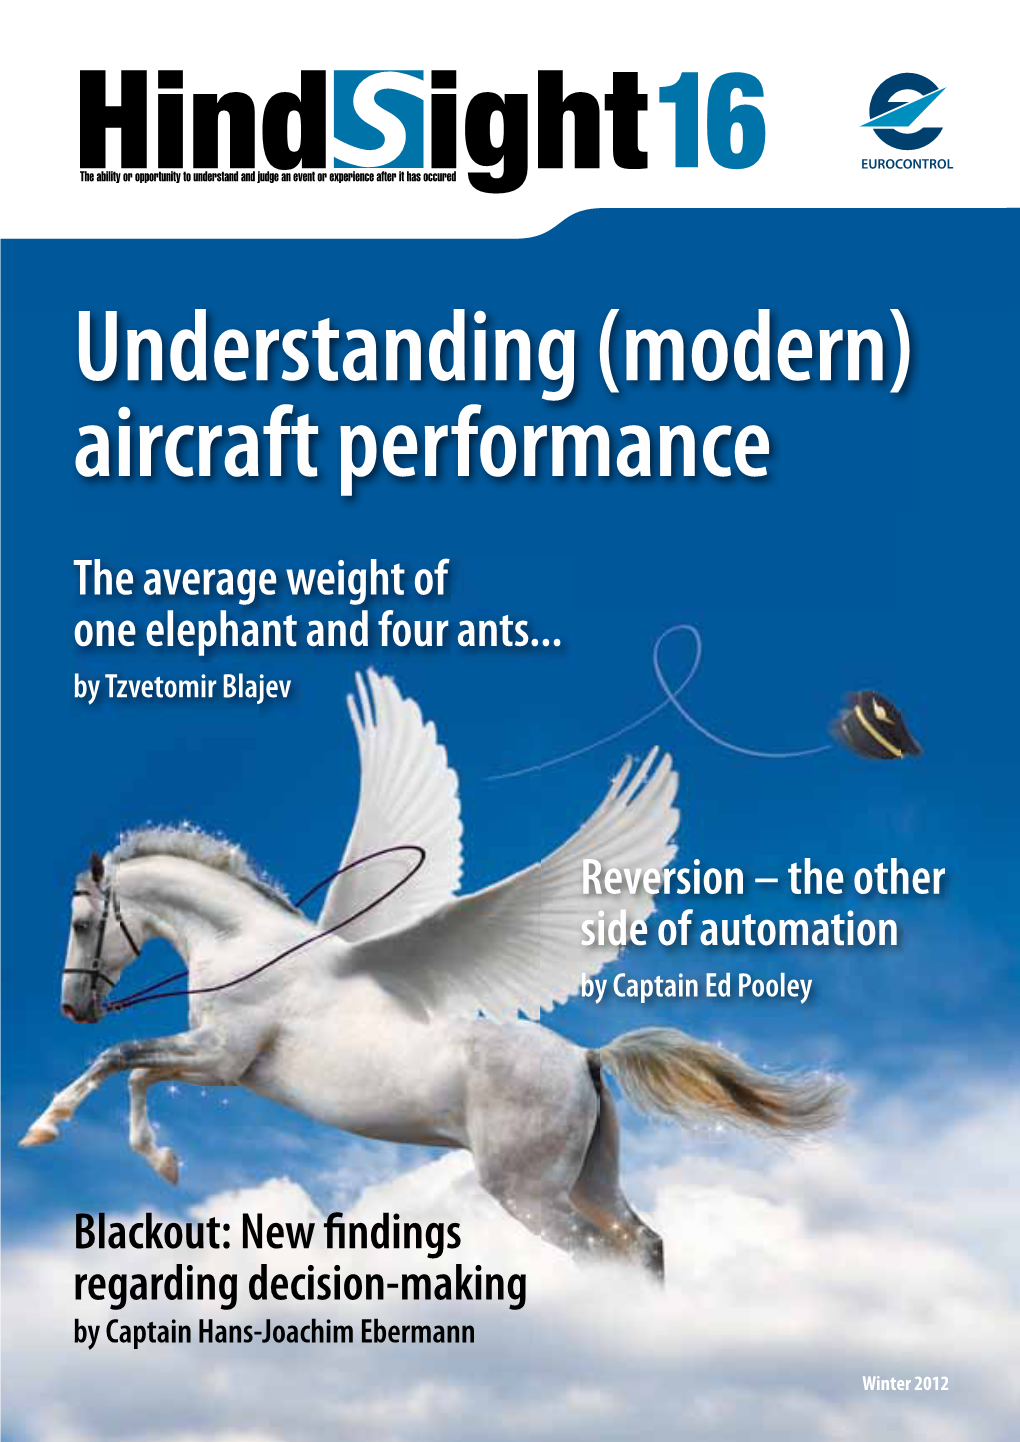 Aircraft Performance